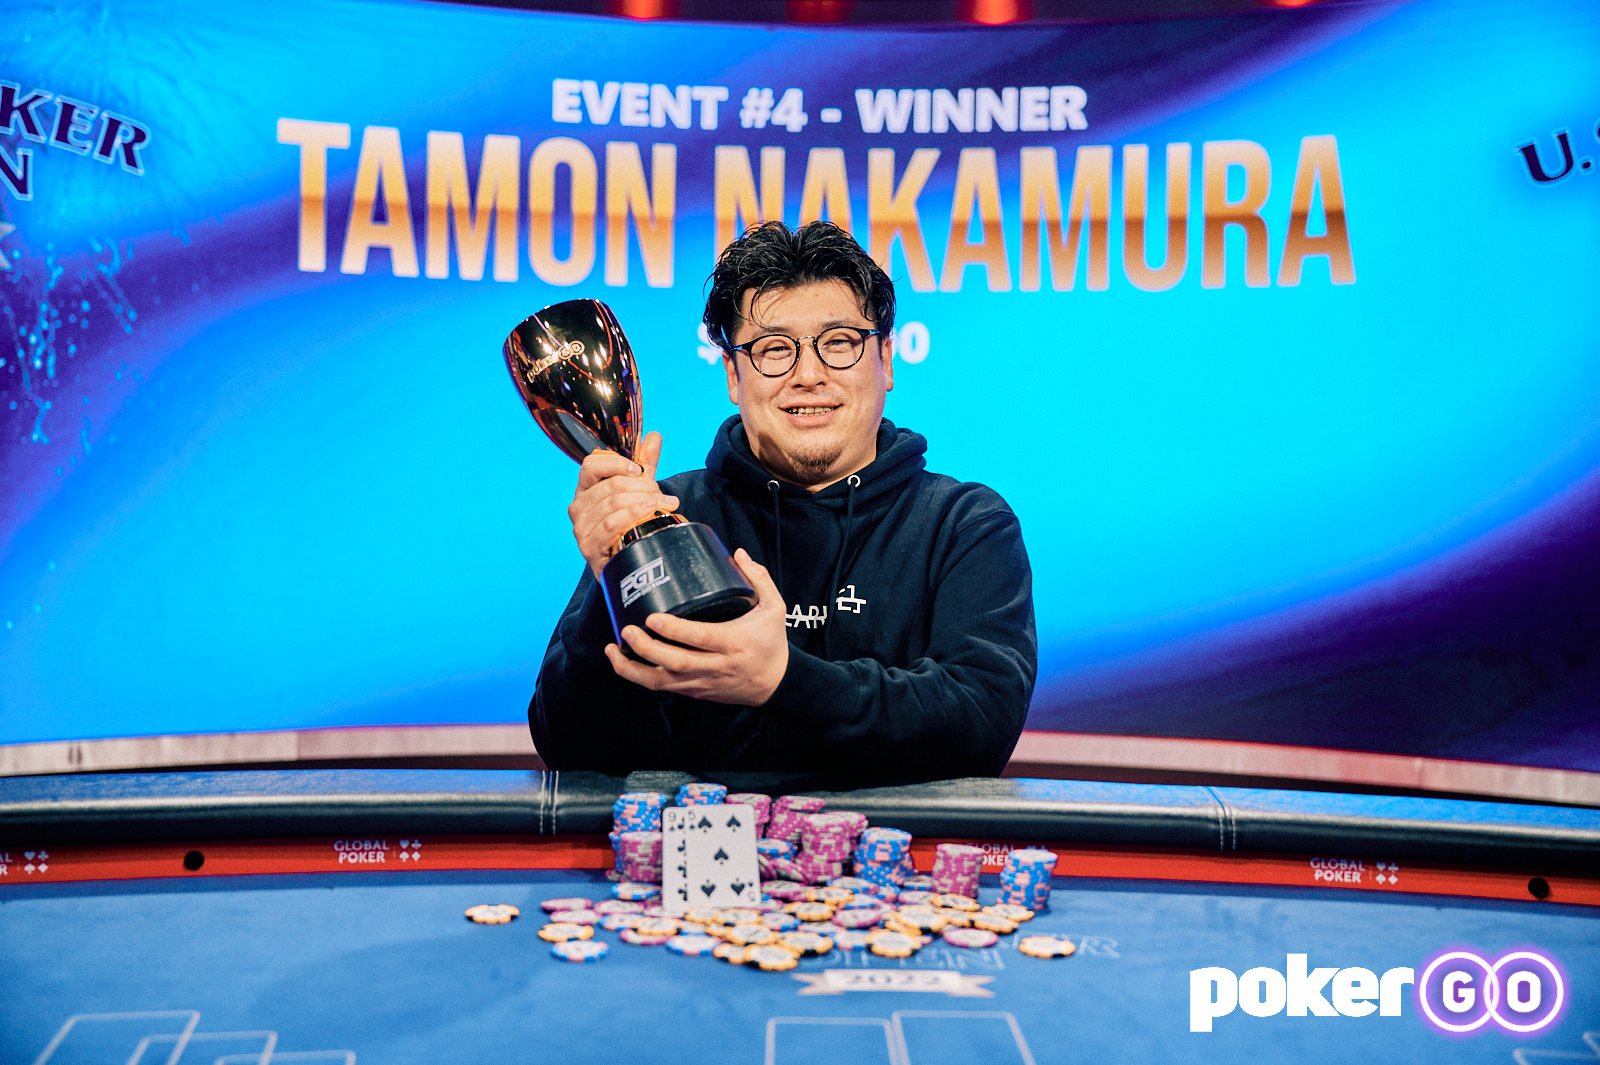 Tamon Nakamura wins Event #4 at the 2022 U.S. Poker Open